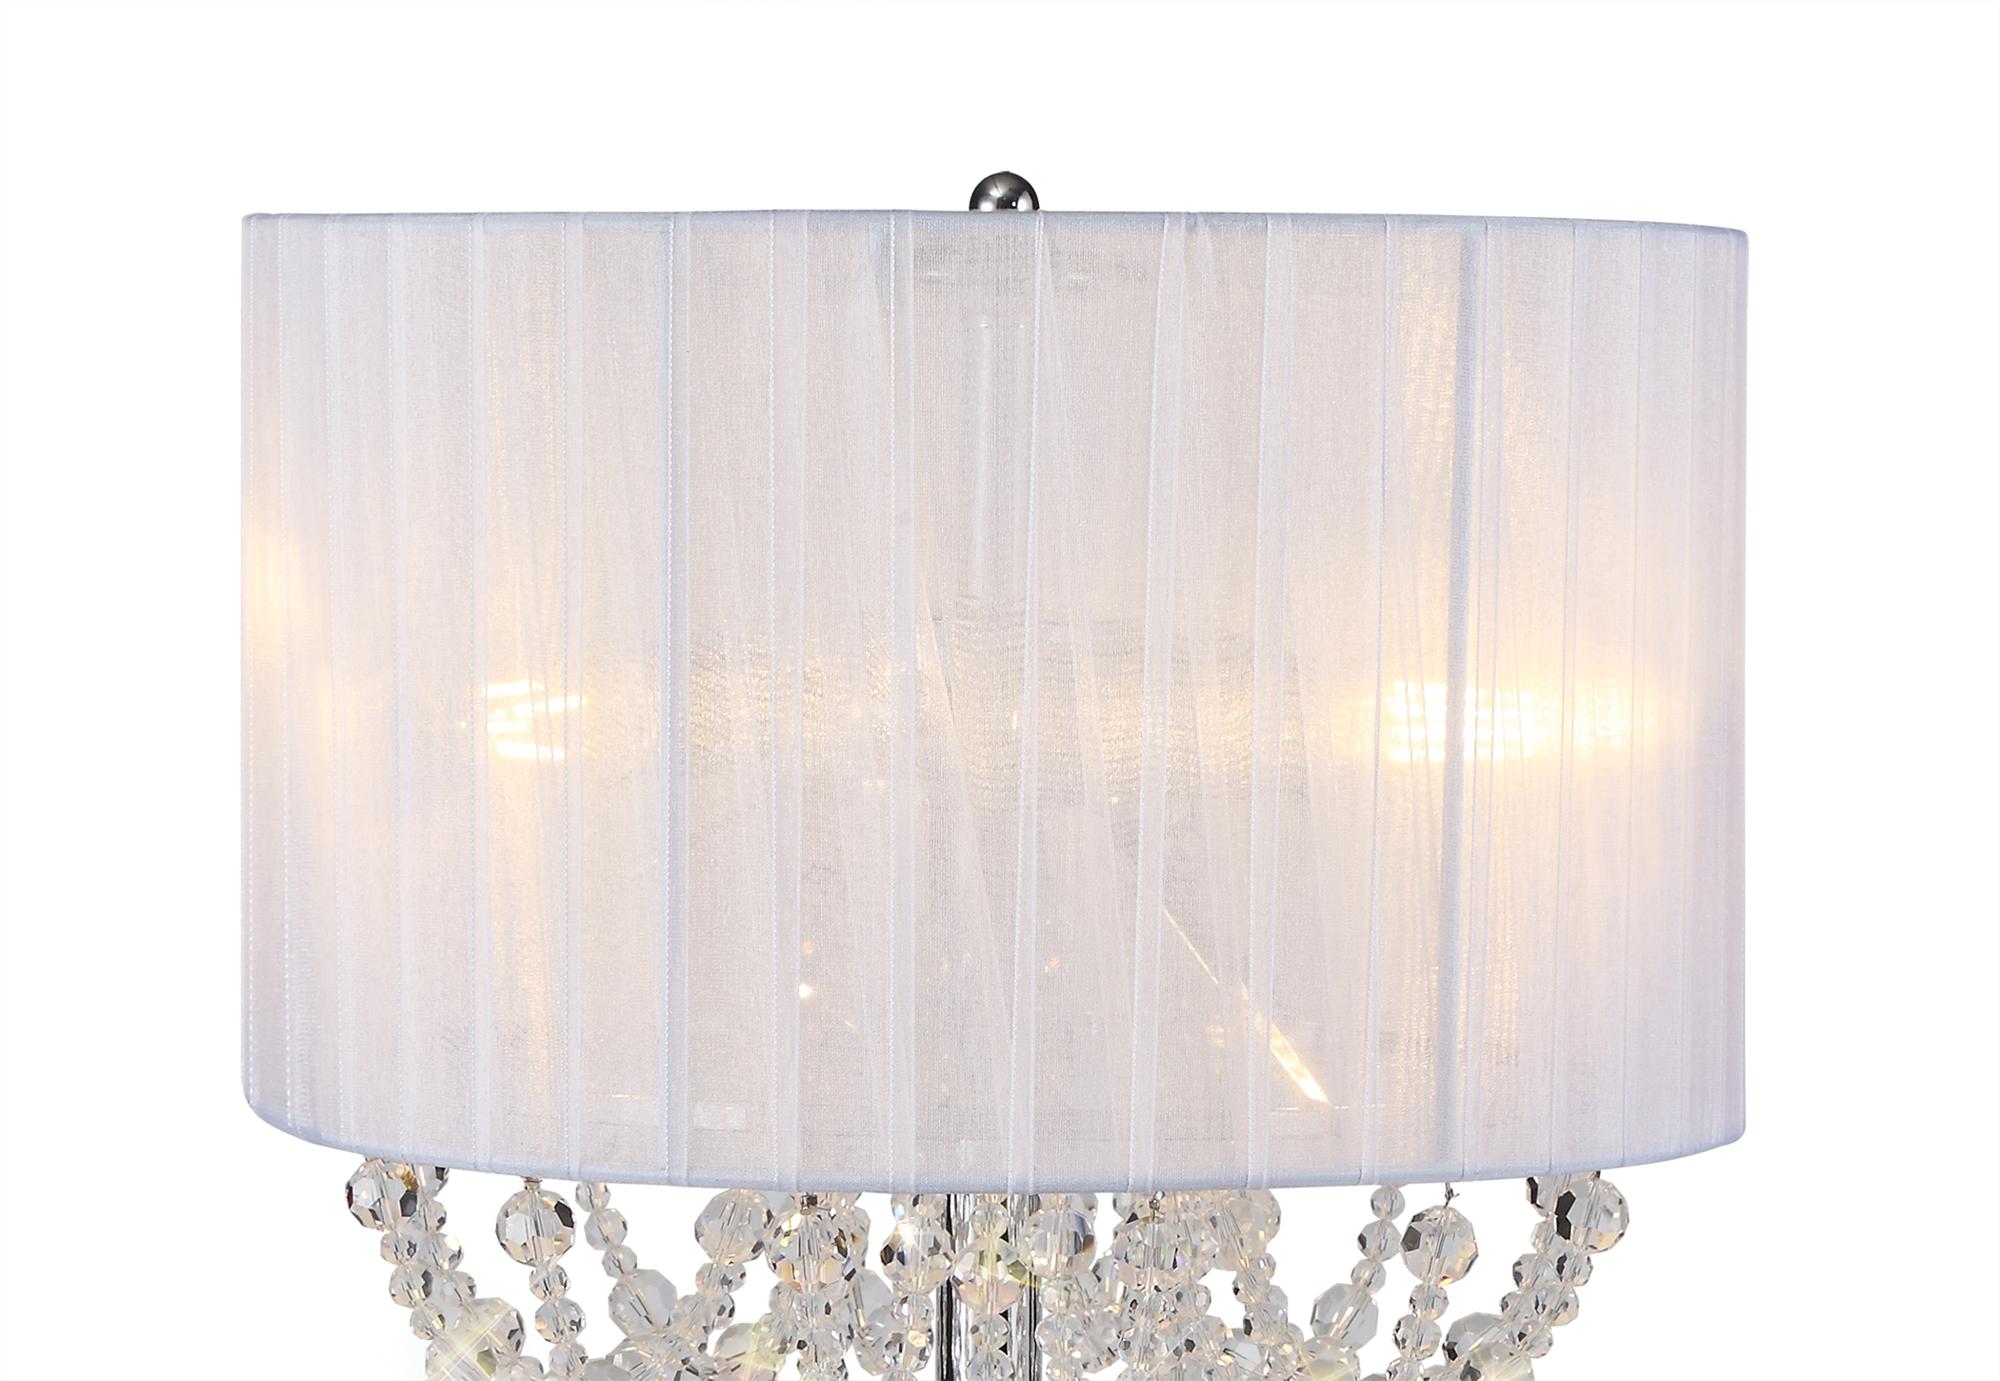 Freida Polished Chrome-White Crystal Table Lamps Diyas Shaded Table Lamps